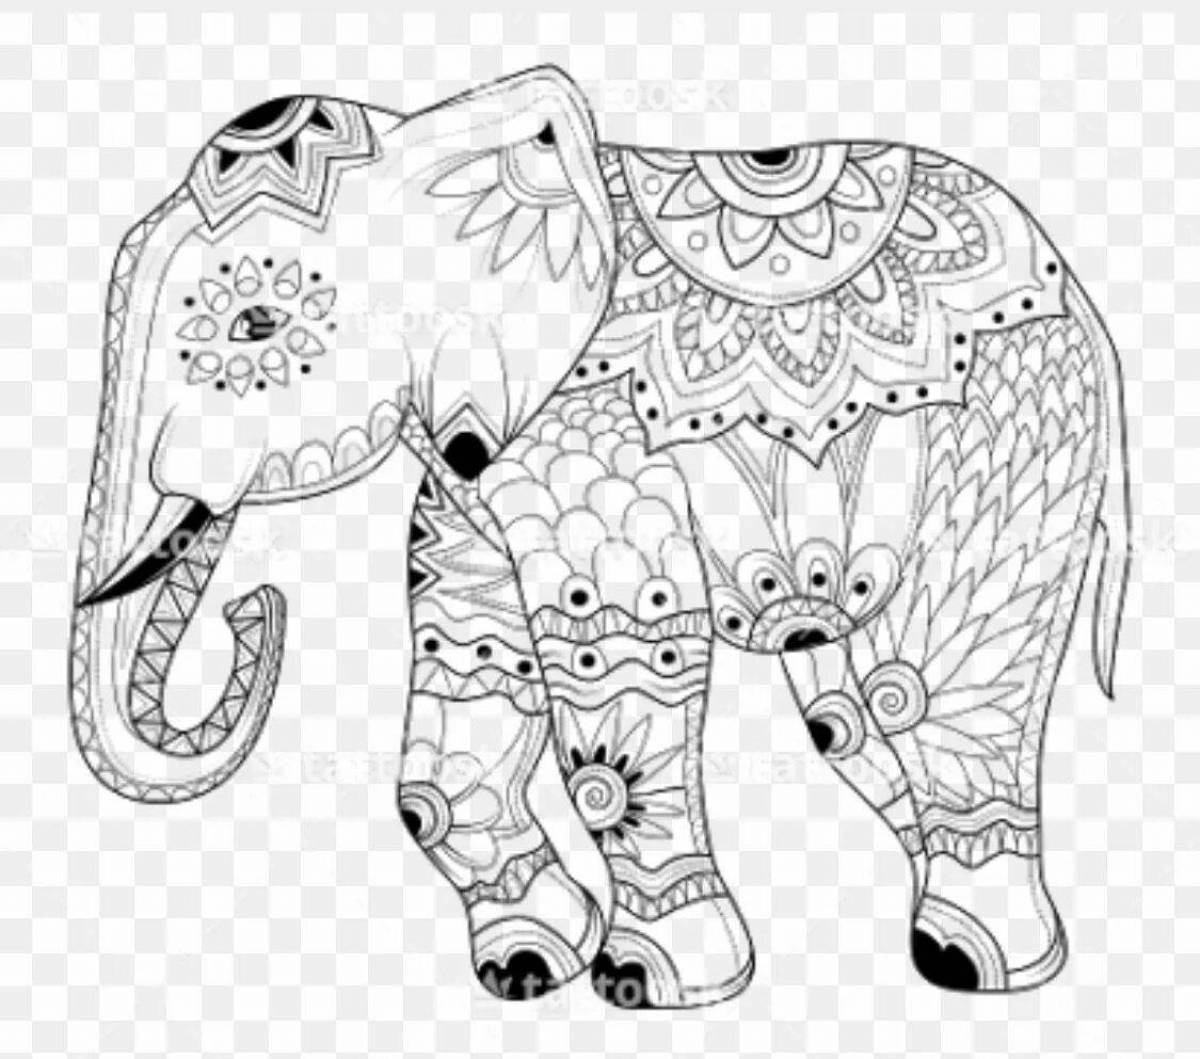 Impressive coloring Indian elephant